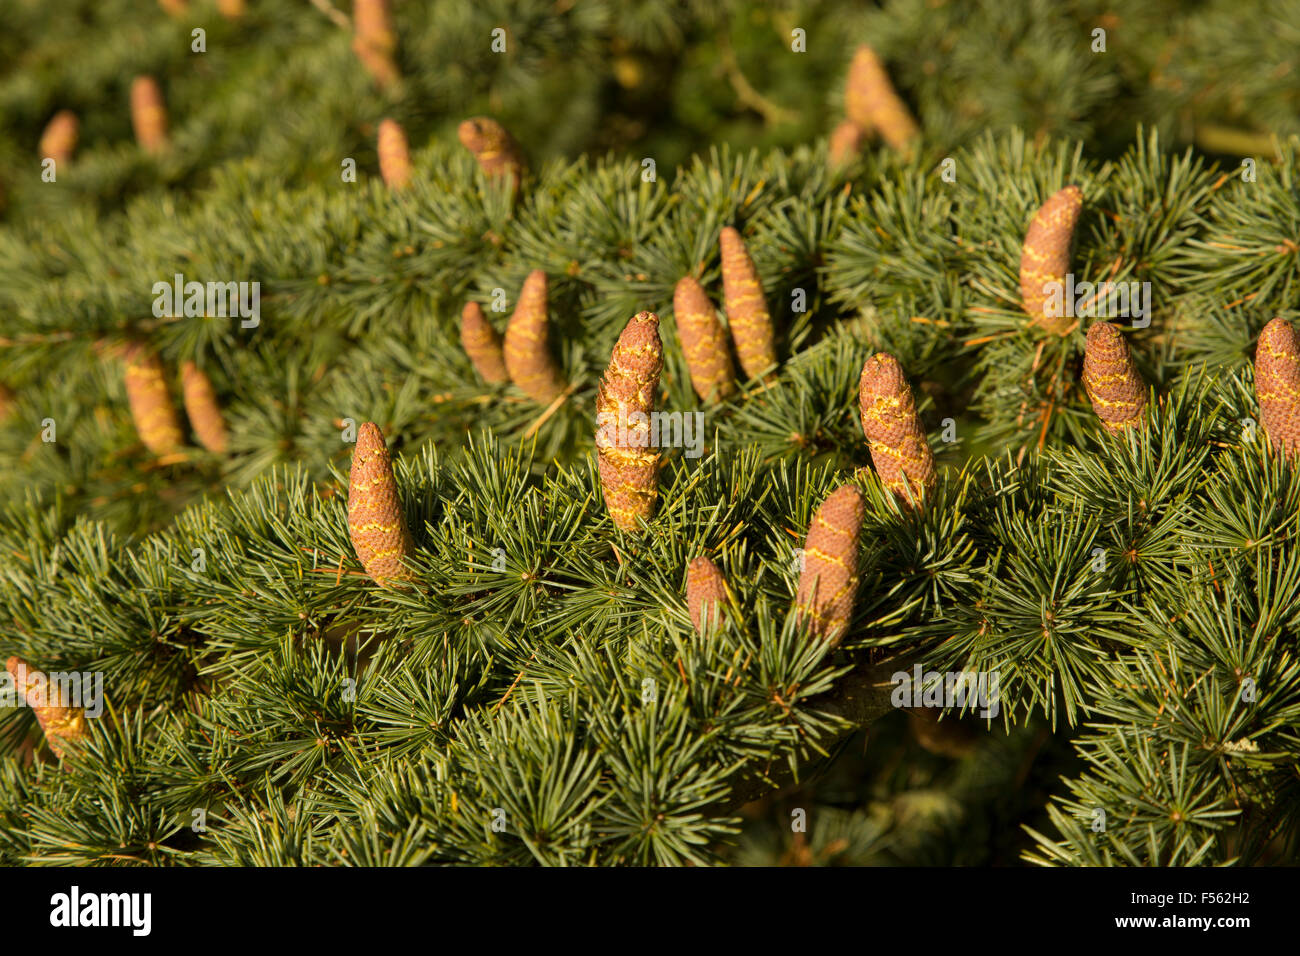 Pine Cone / Fir Cone on a bushy pine / fire tree Stock Photo